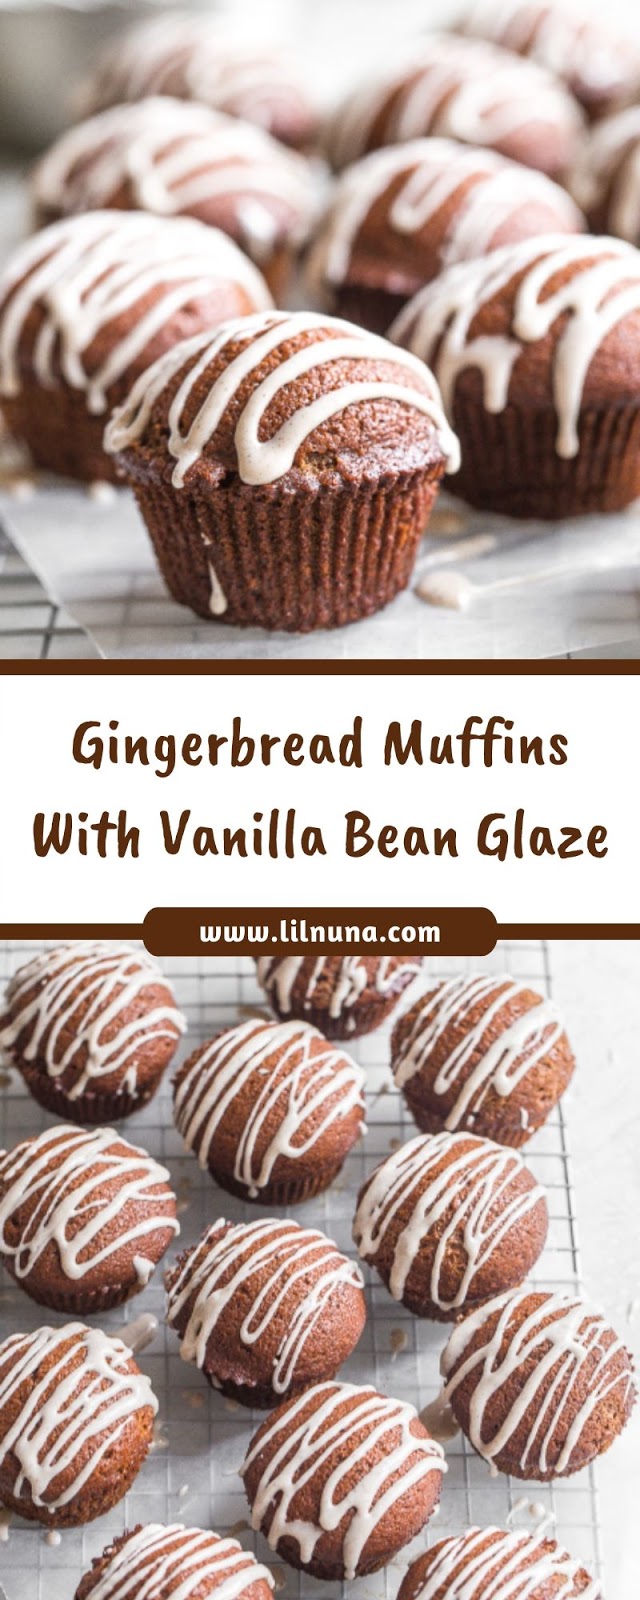 Gingerbread Muffins With Vanilla Bean Glaze